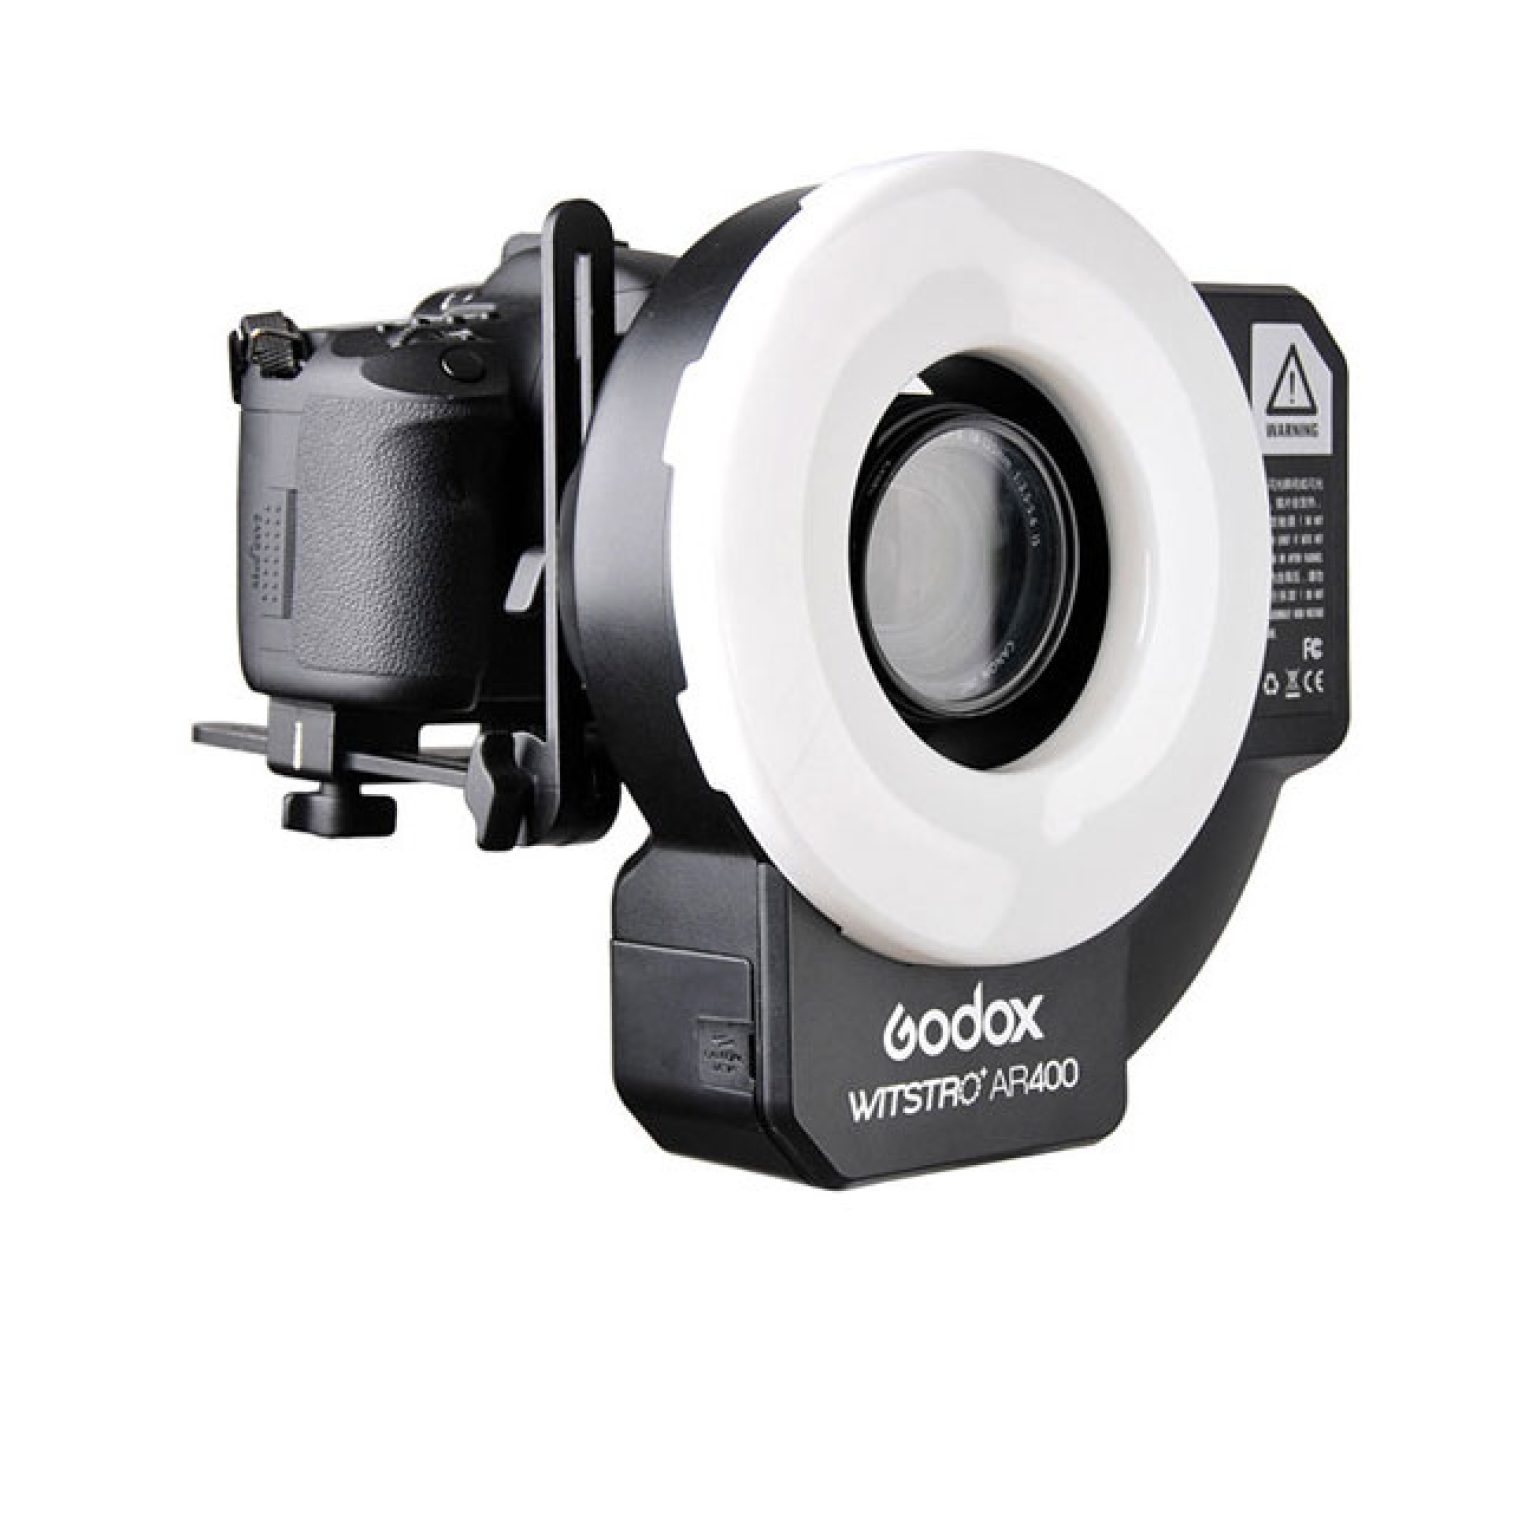 Godox Witstro Ring Flash AR4001